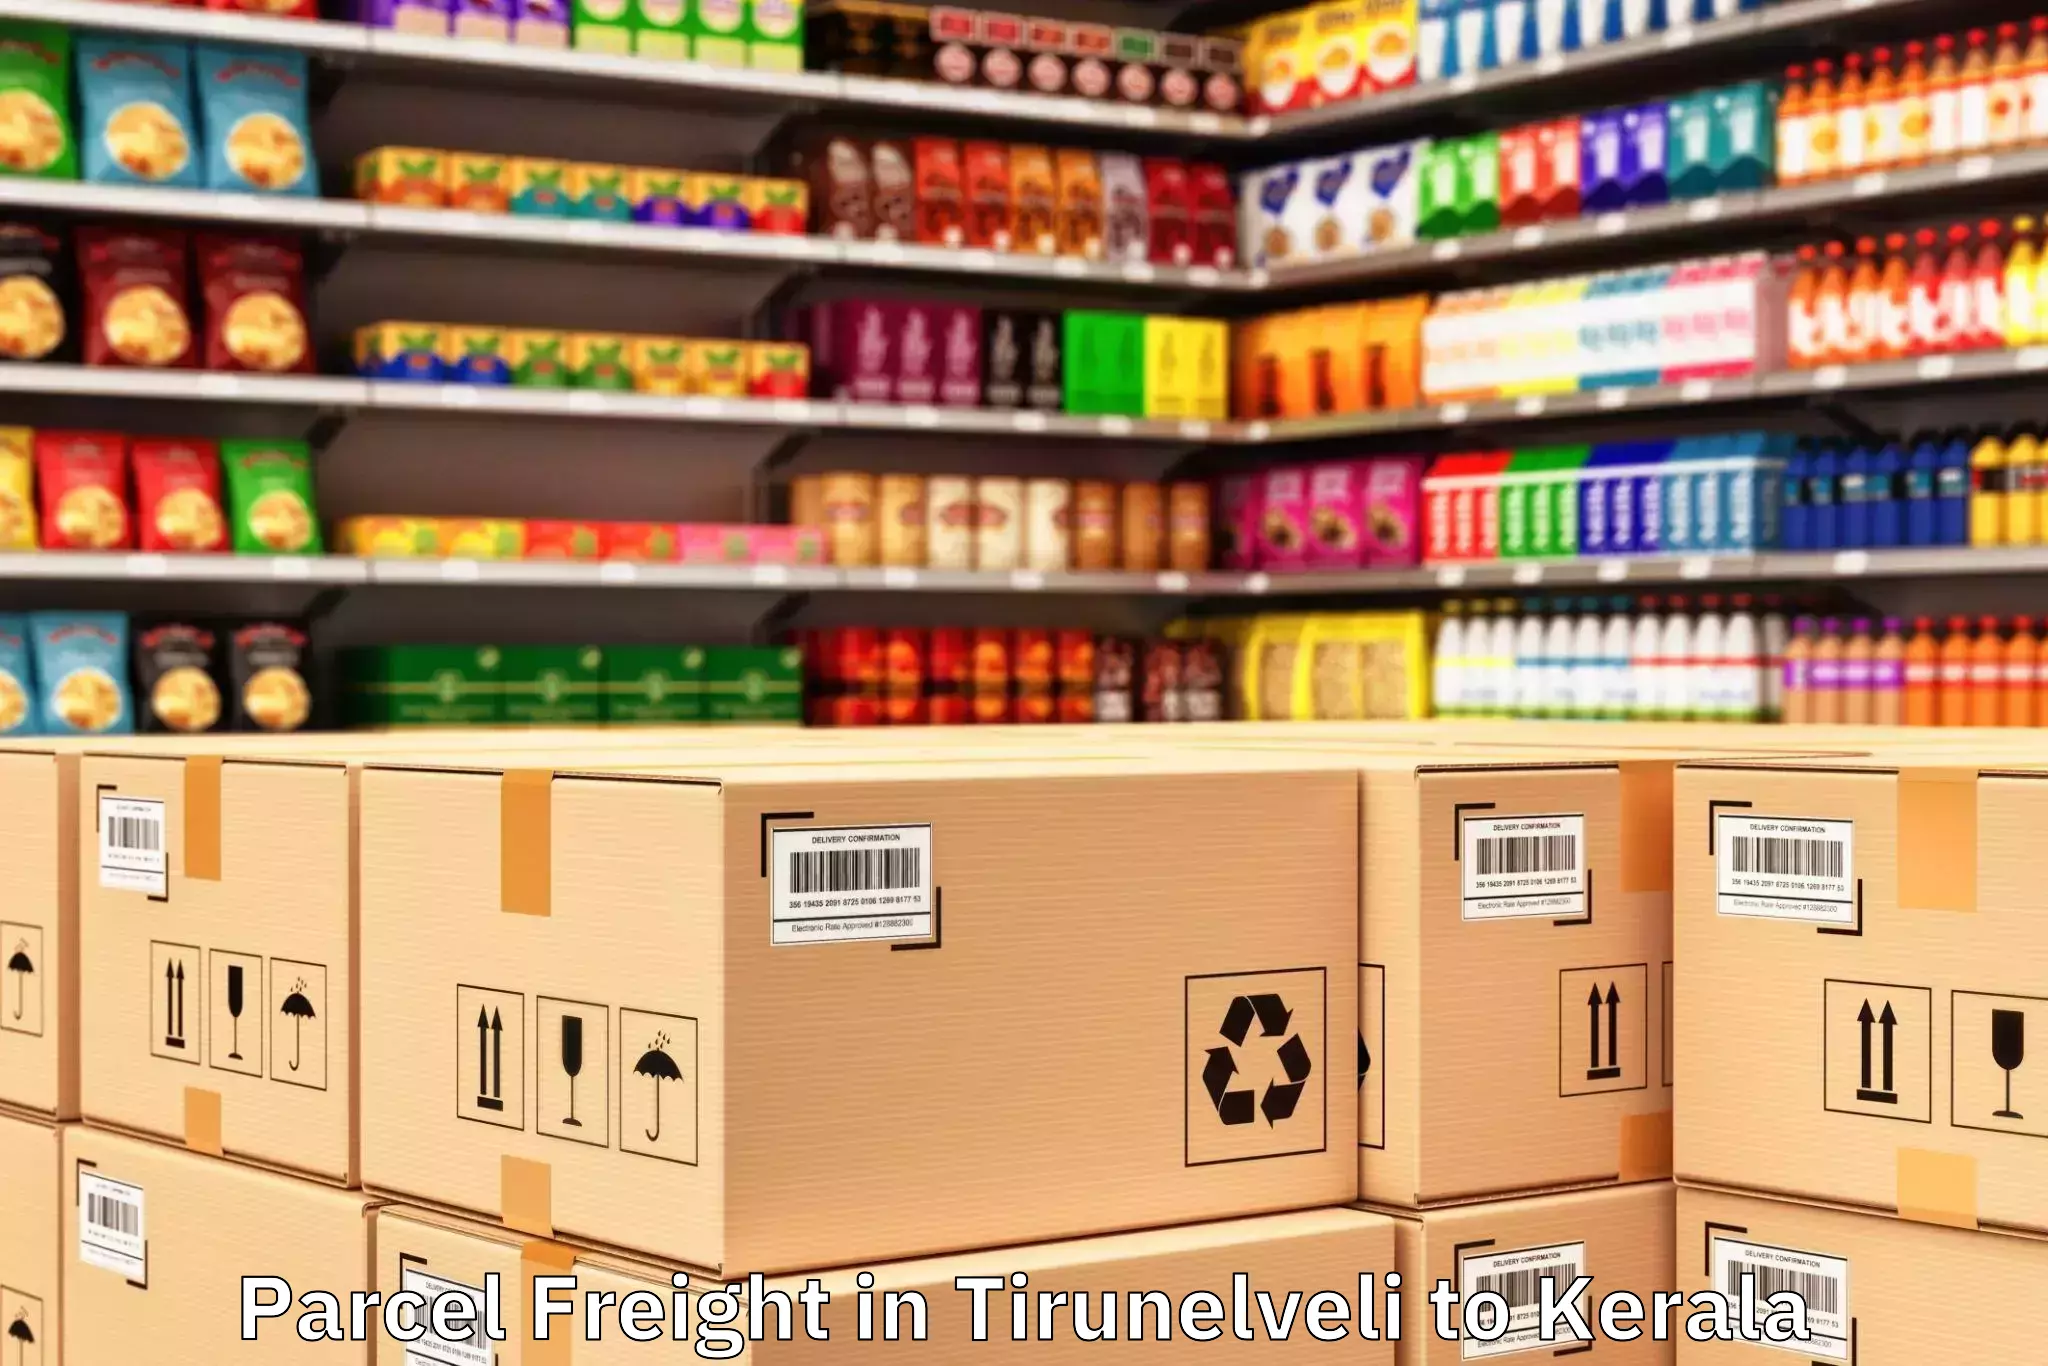 Top Tirunelveli to Kerala Parcel Freight Available